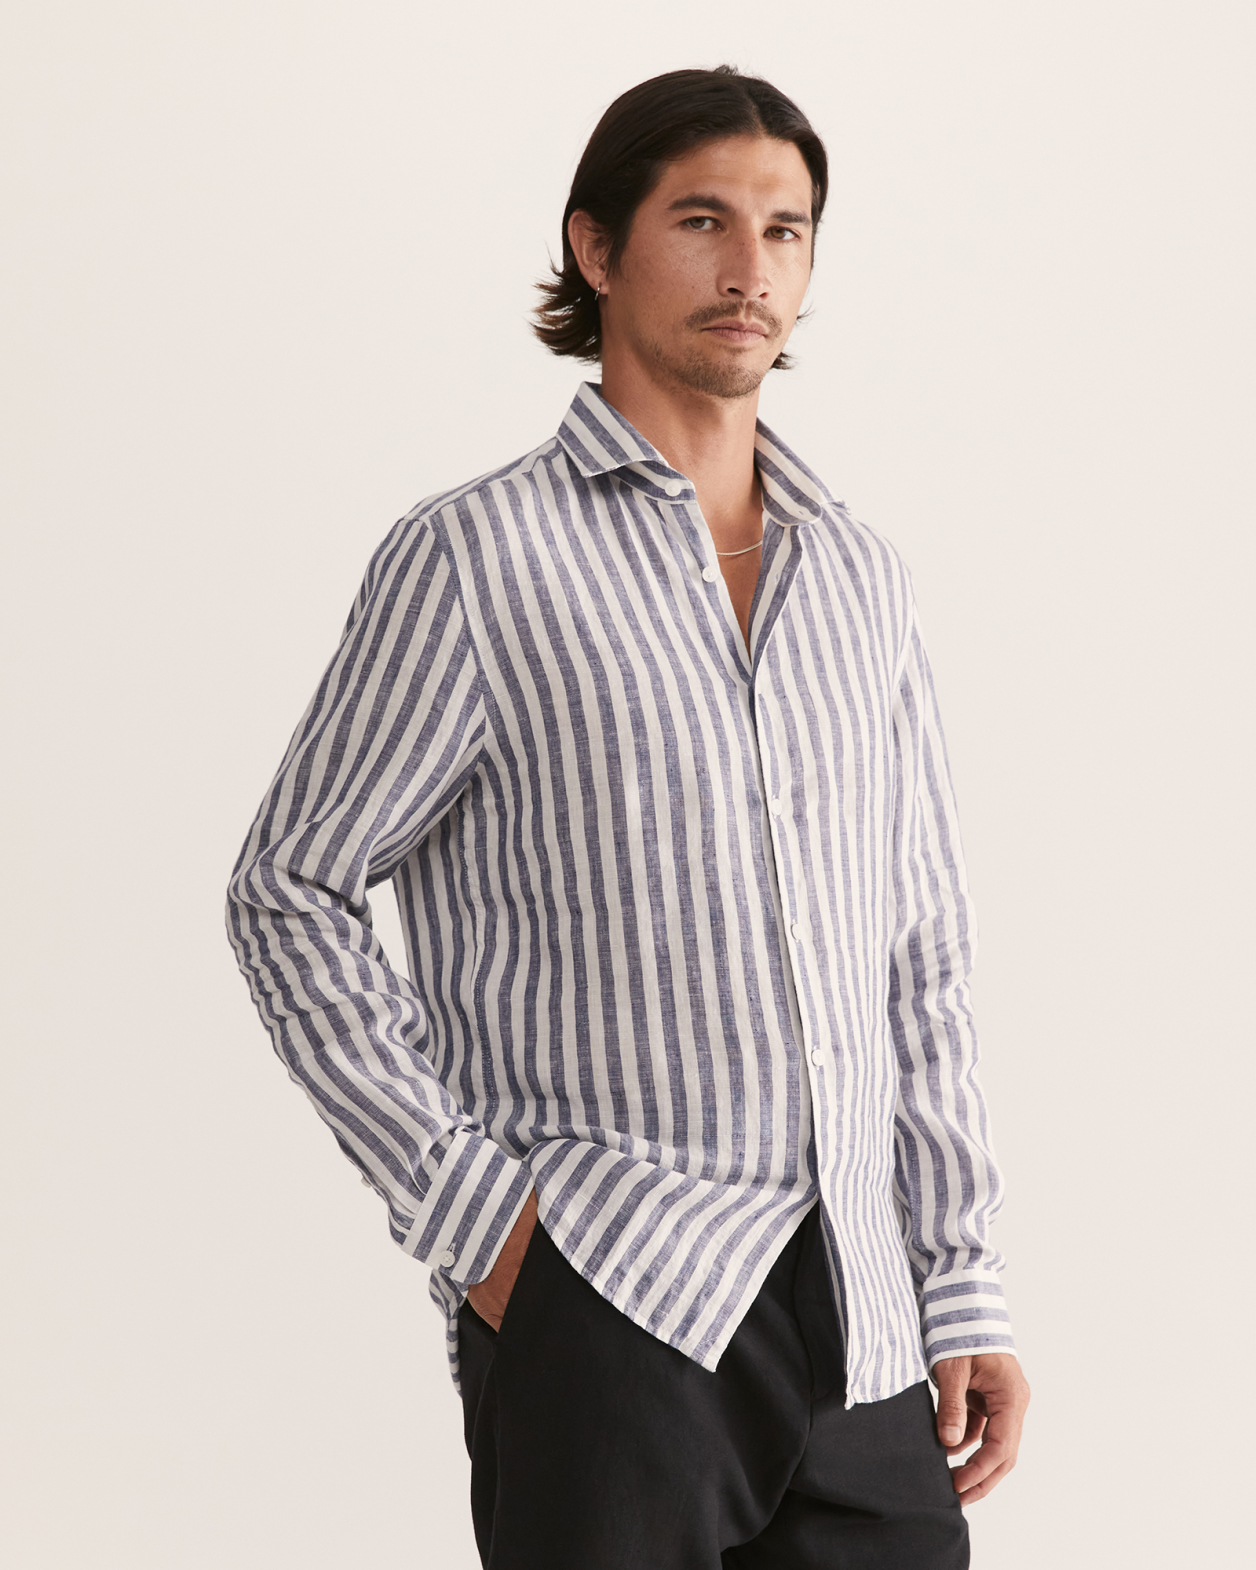 Anderson Long Sleeve Stripe Linen Shirt in NAVY